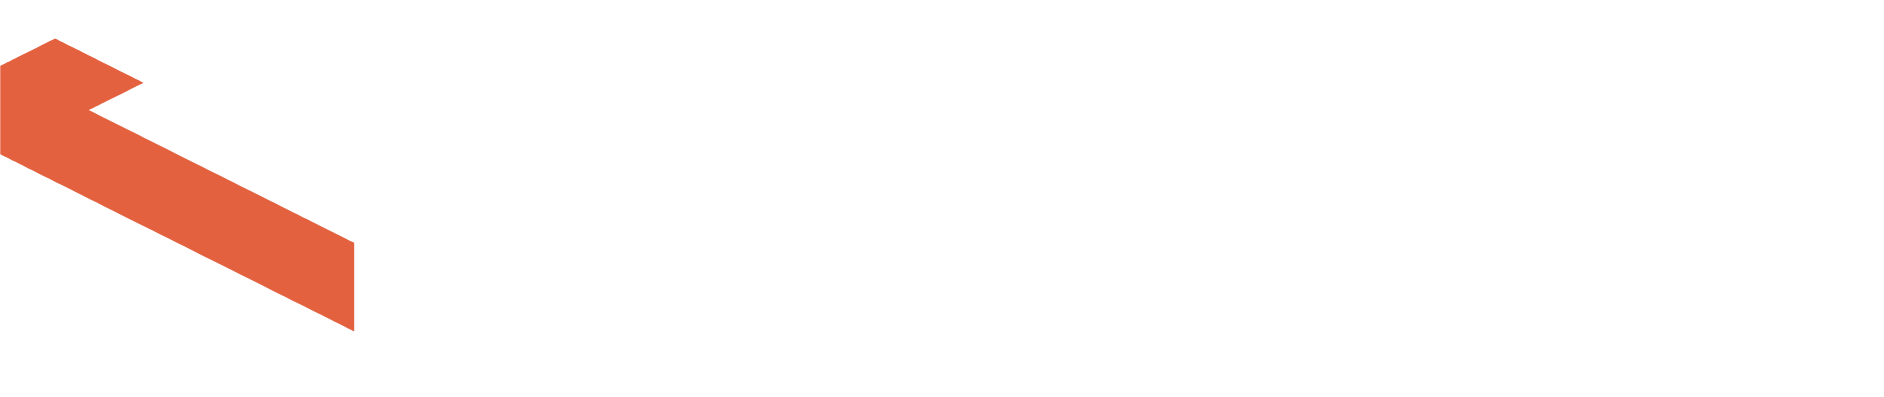 Snap One logo large for dark backgrounds (transparent PNG)